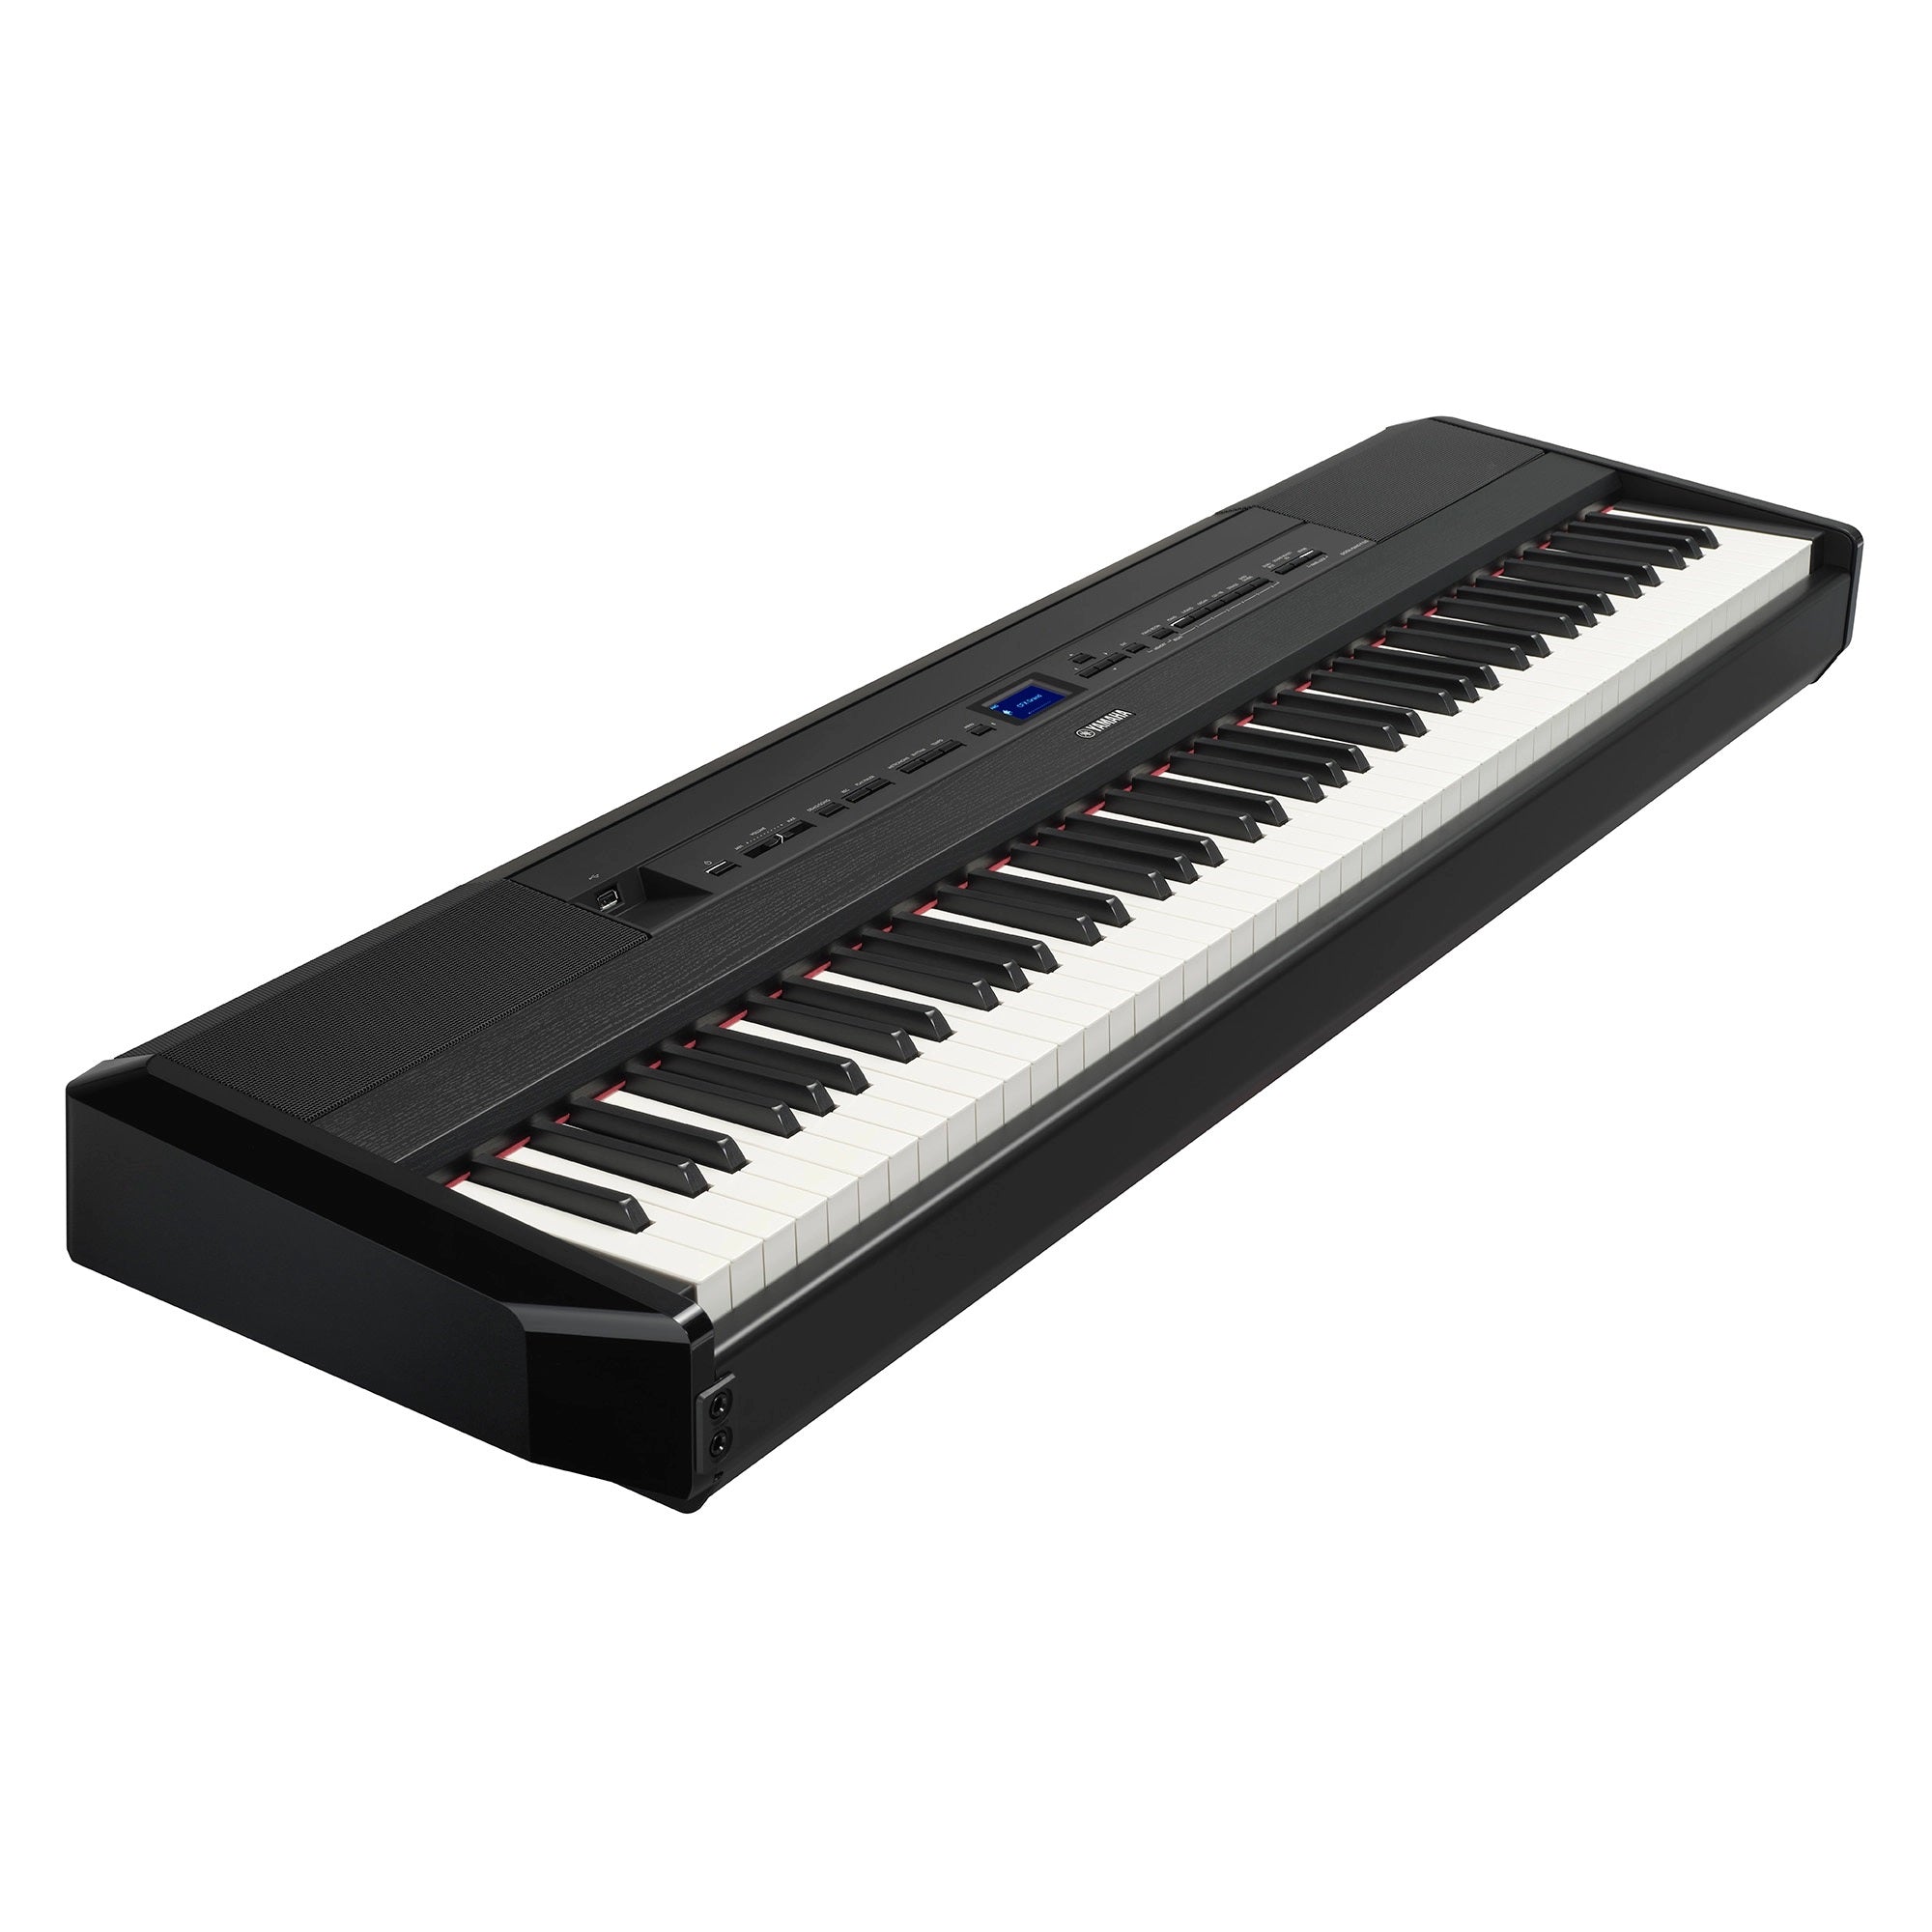 Yamaha P525 88-key Digital Piano with Speakers, Black